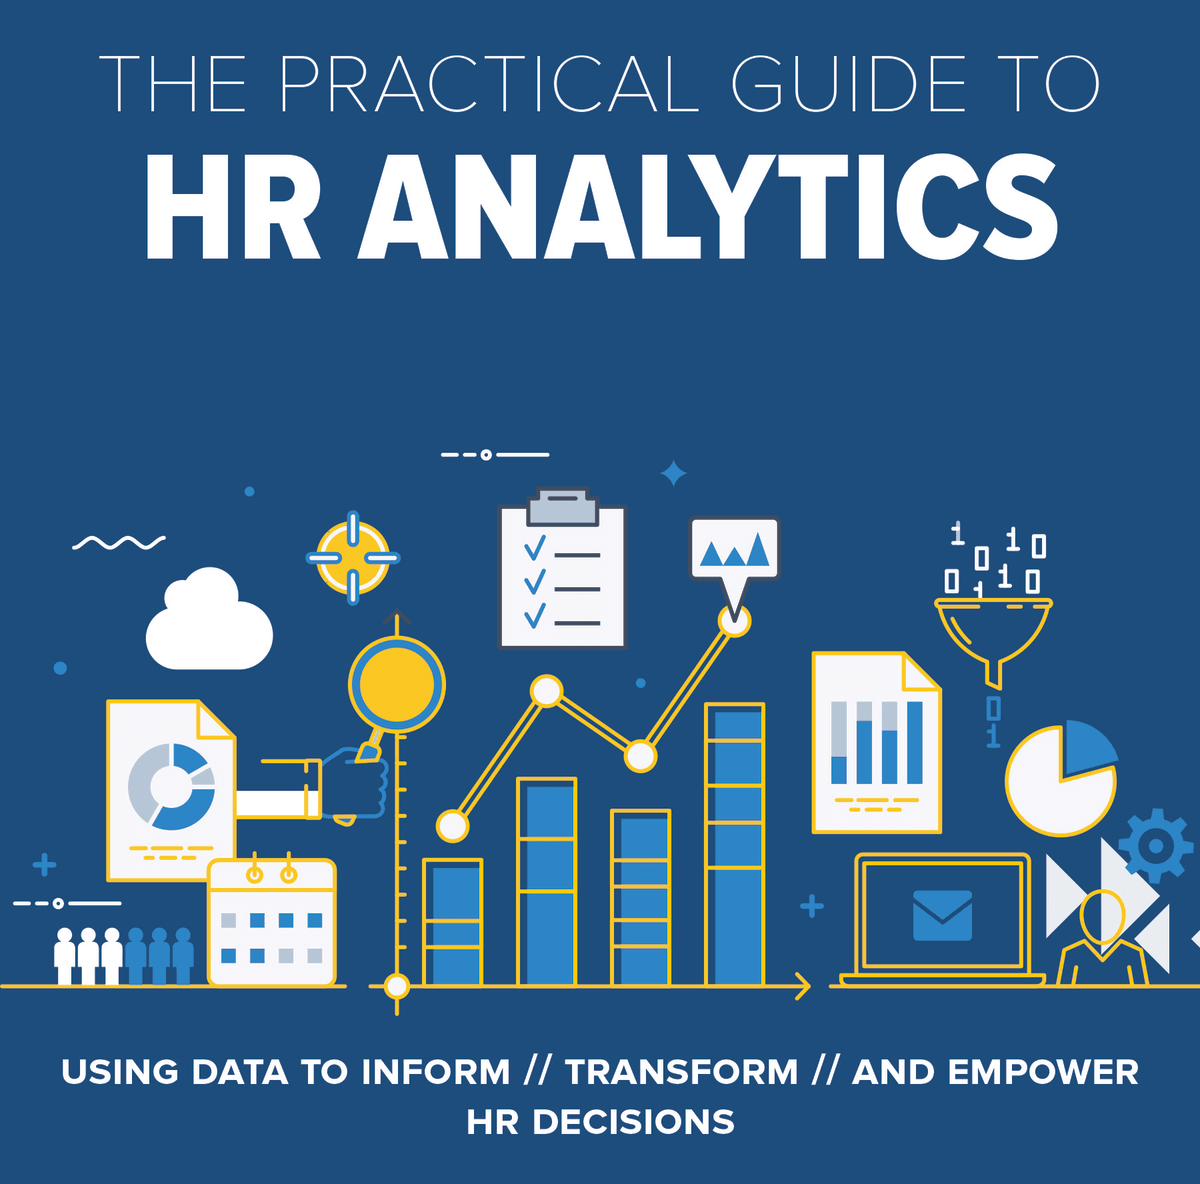 What is HR Analytics?